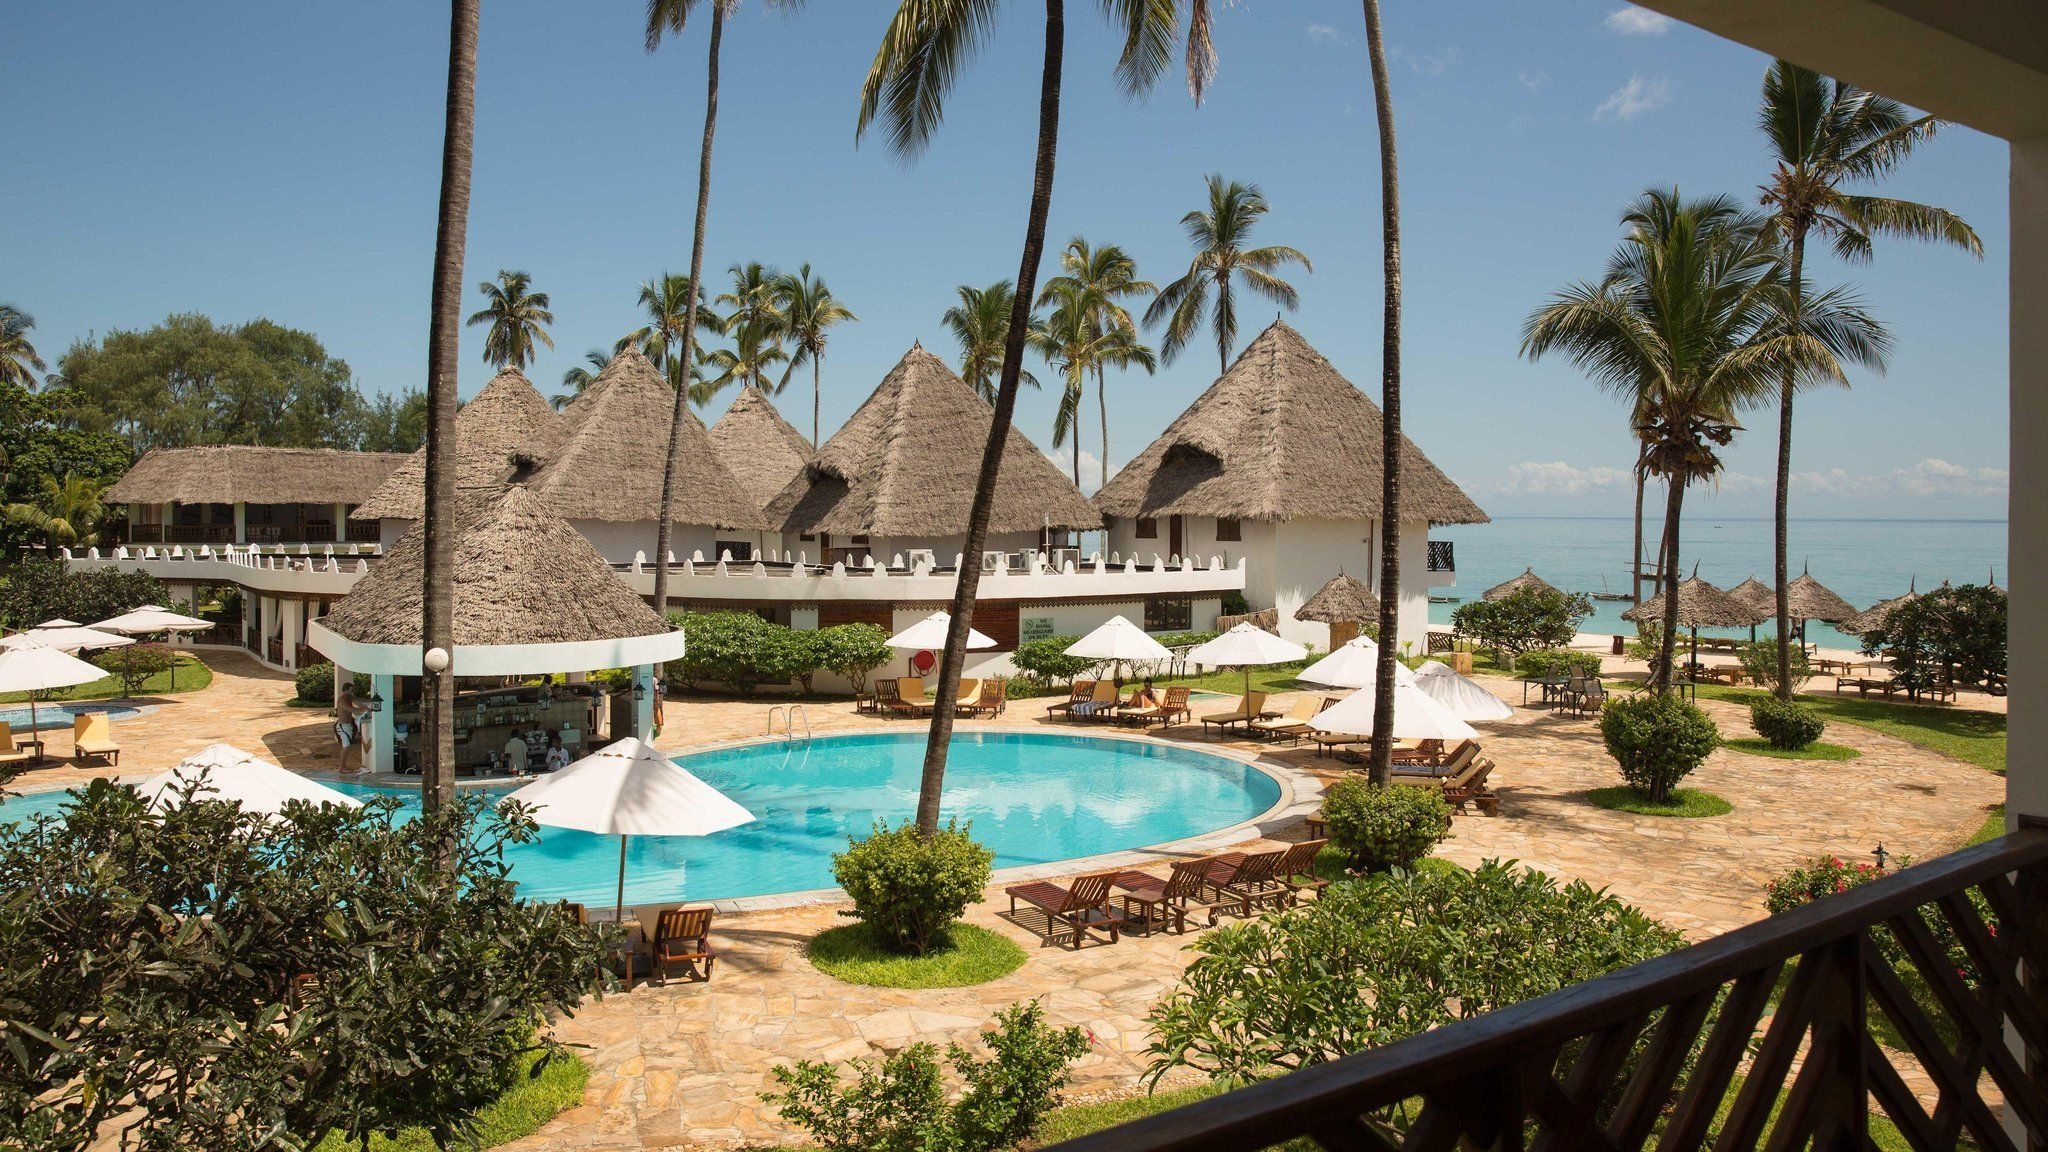 Zanzibar holiday 2017, Dream vacation, Island paradise, Unforgettable experience, 2050x1160 HD Desktop